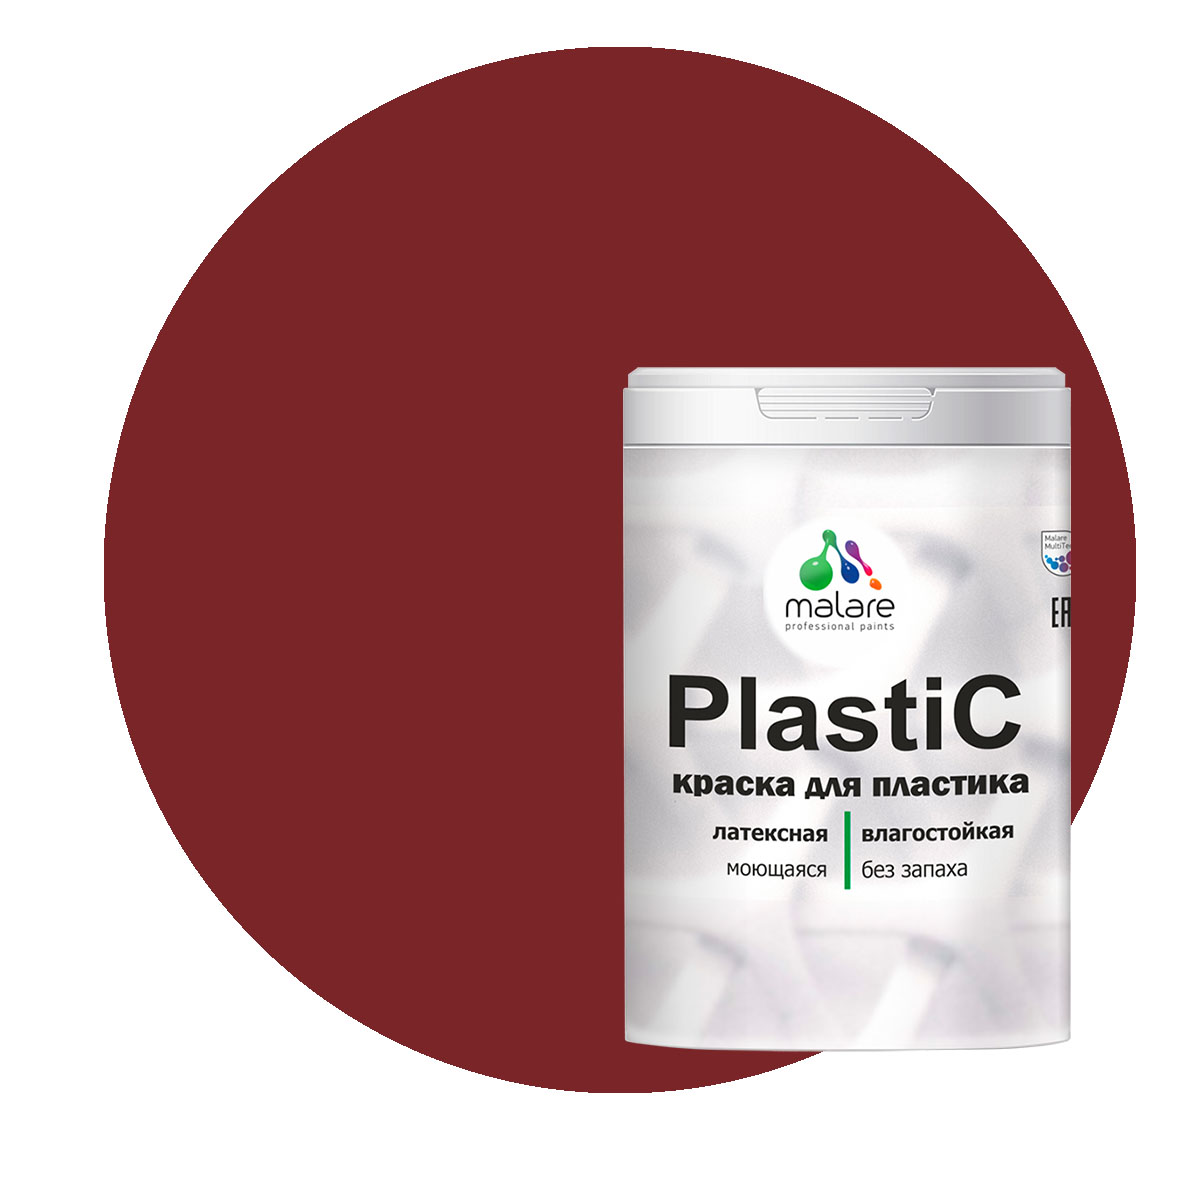 Краска Malare PlastiC для пластика, ПВХ, для сайдинга, багровый агат, 1 кг.